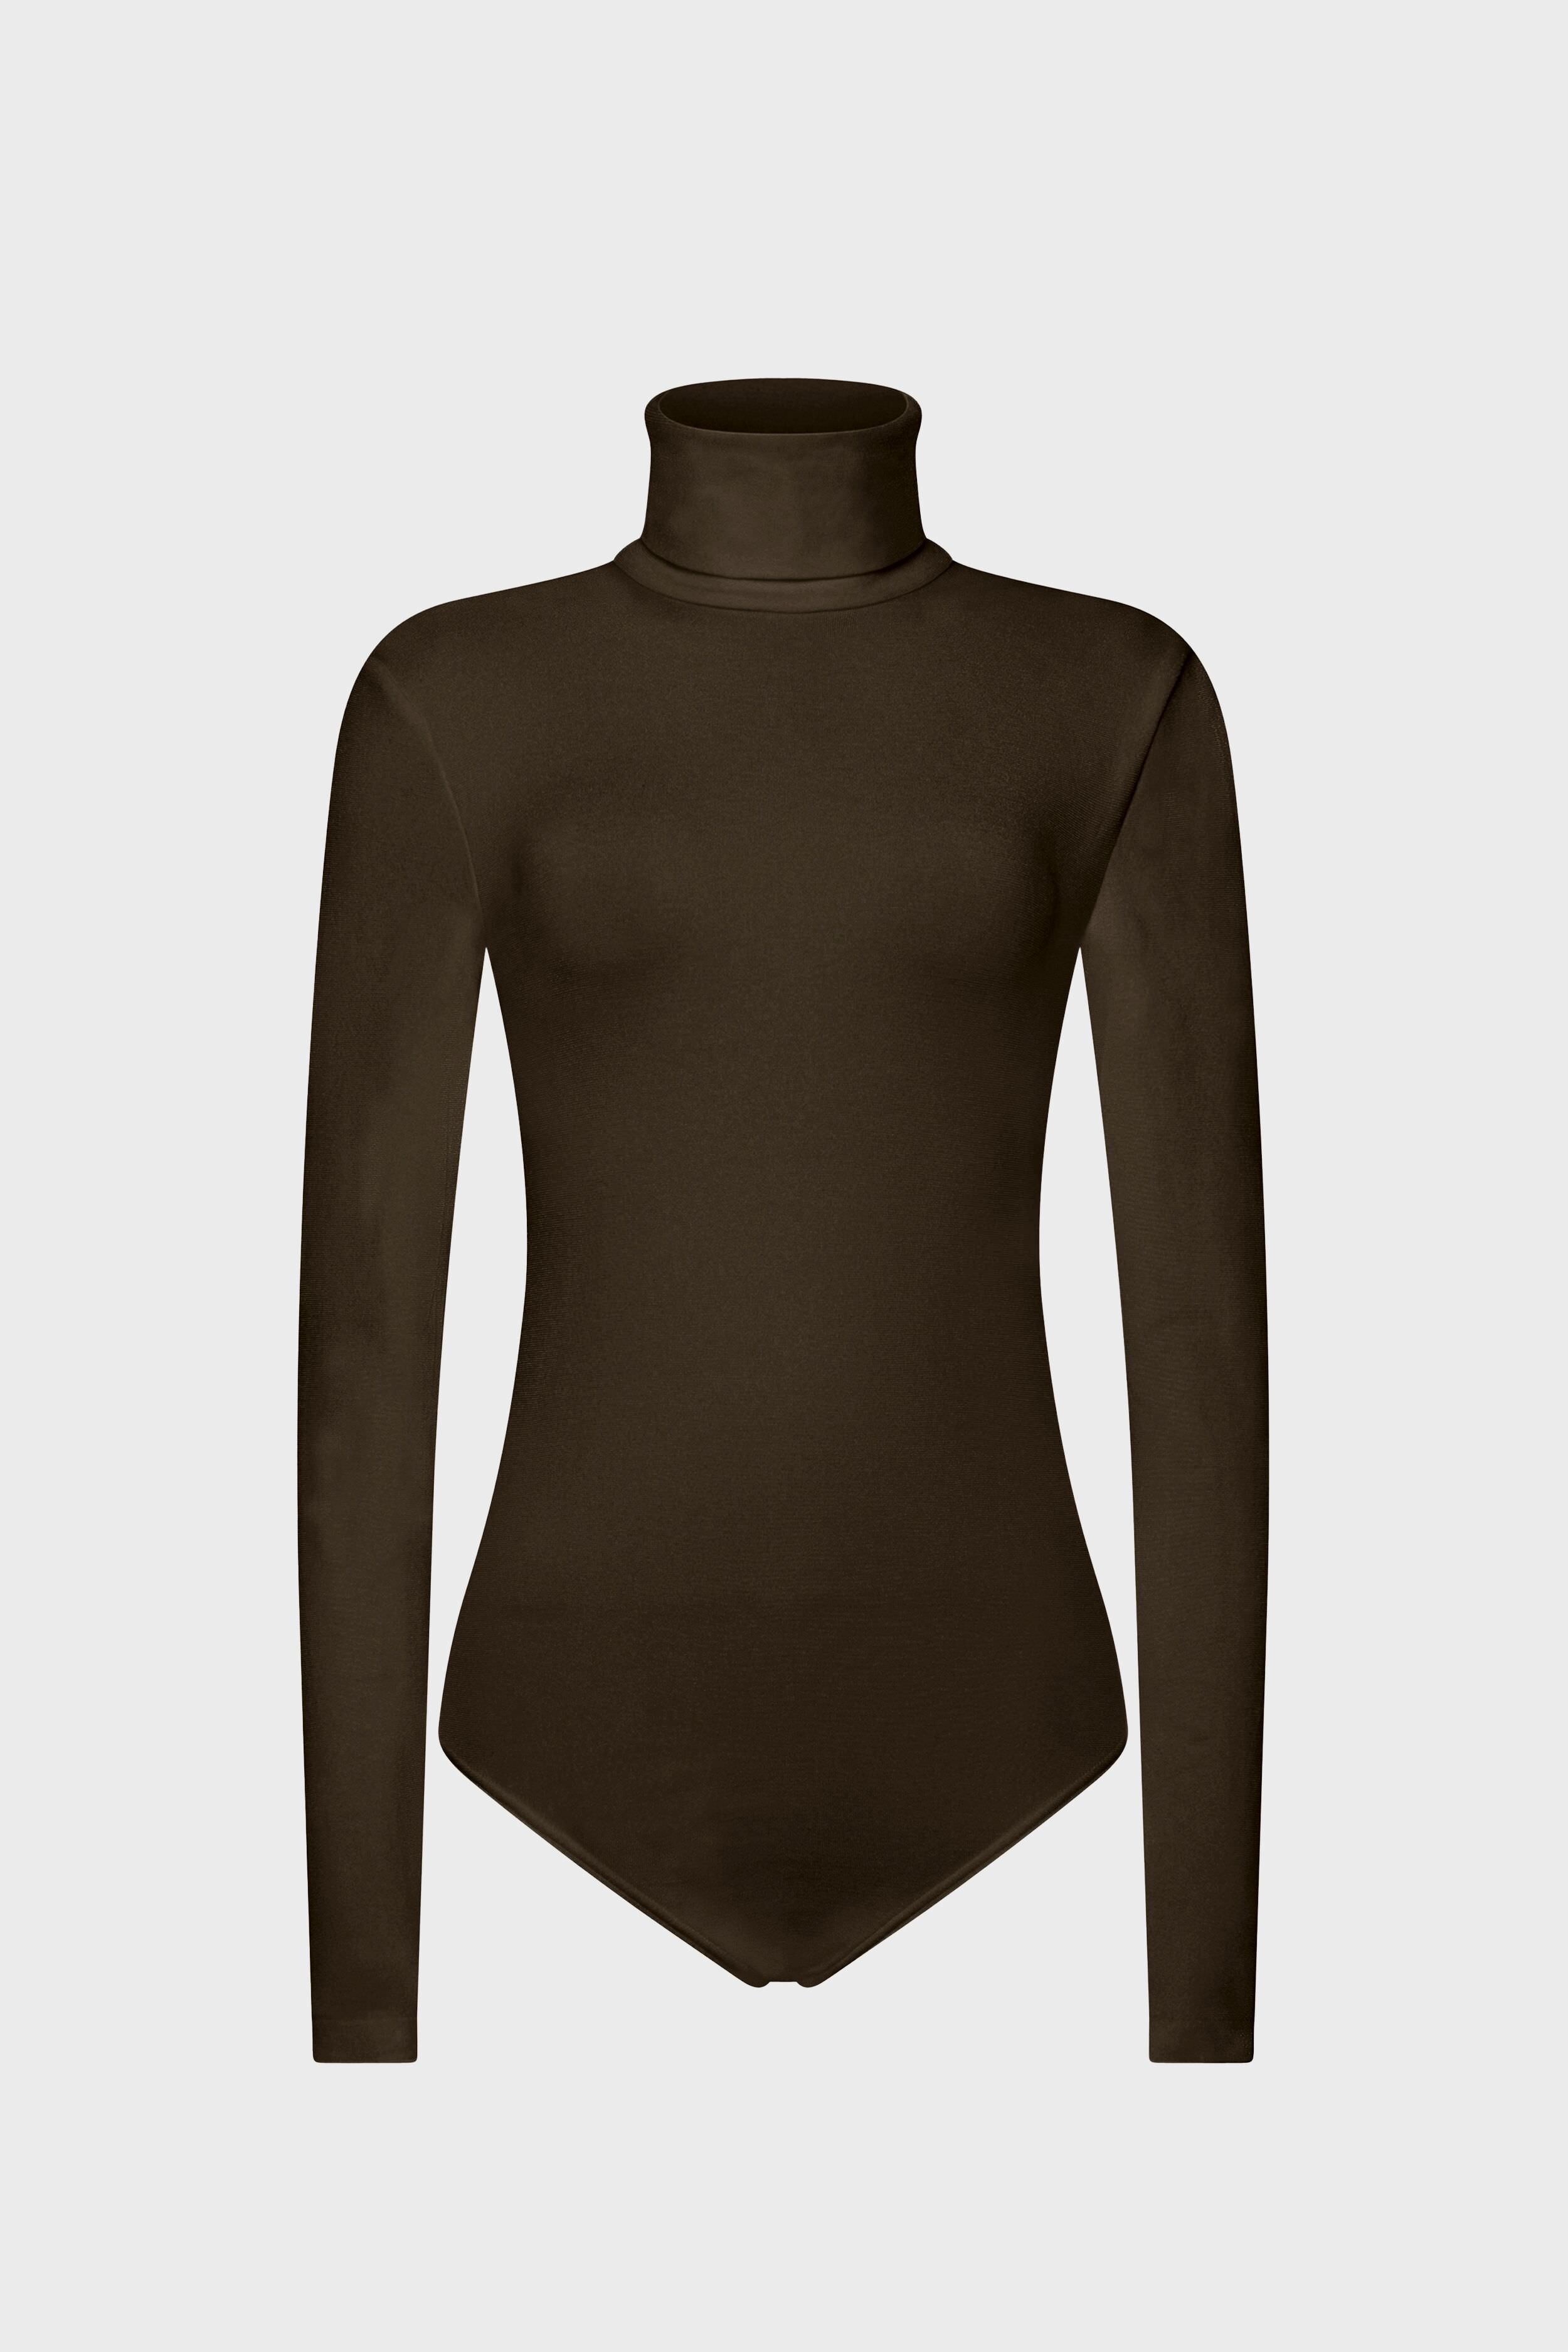 Buy Wolford Colorado String Bodysuit online